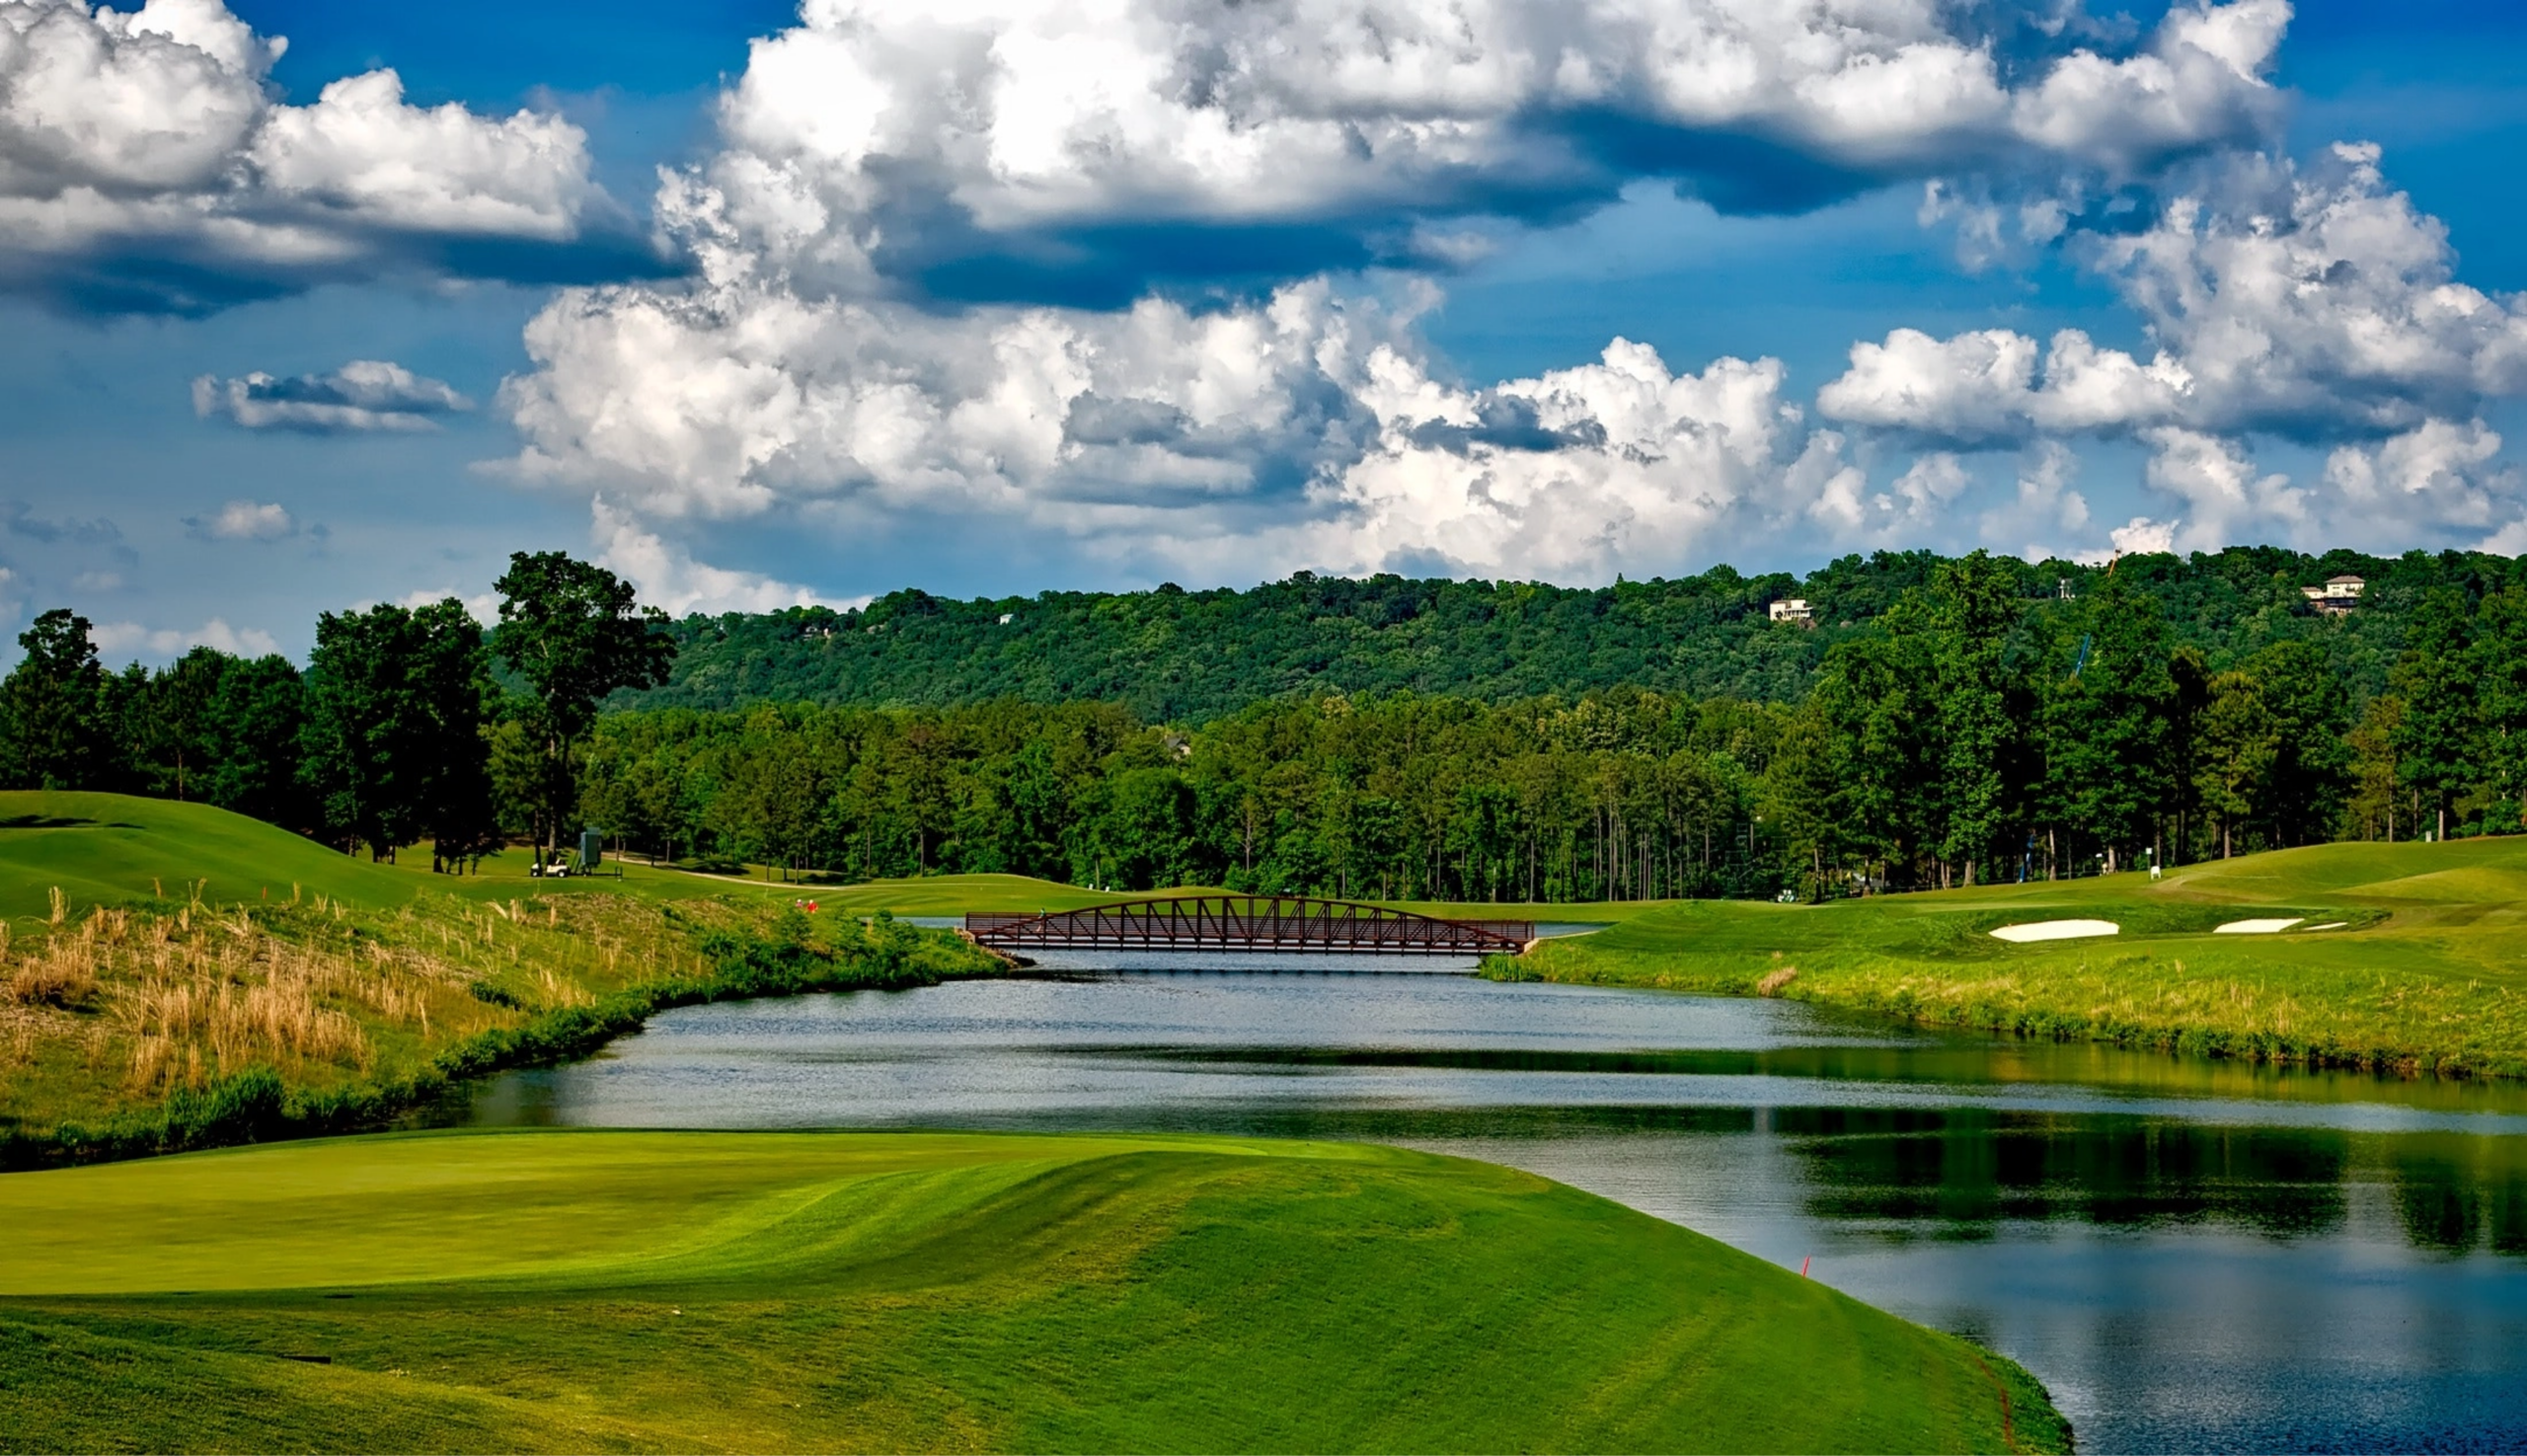 Golf Course in Fall Virginia